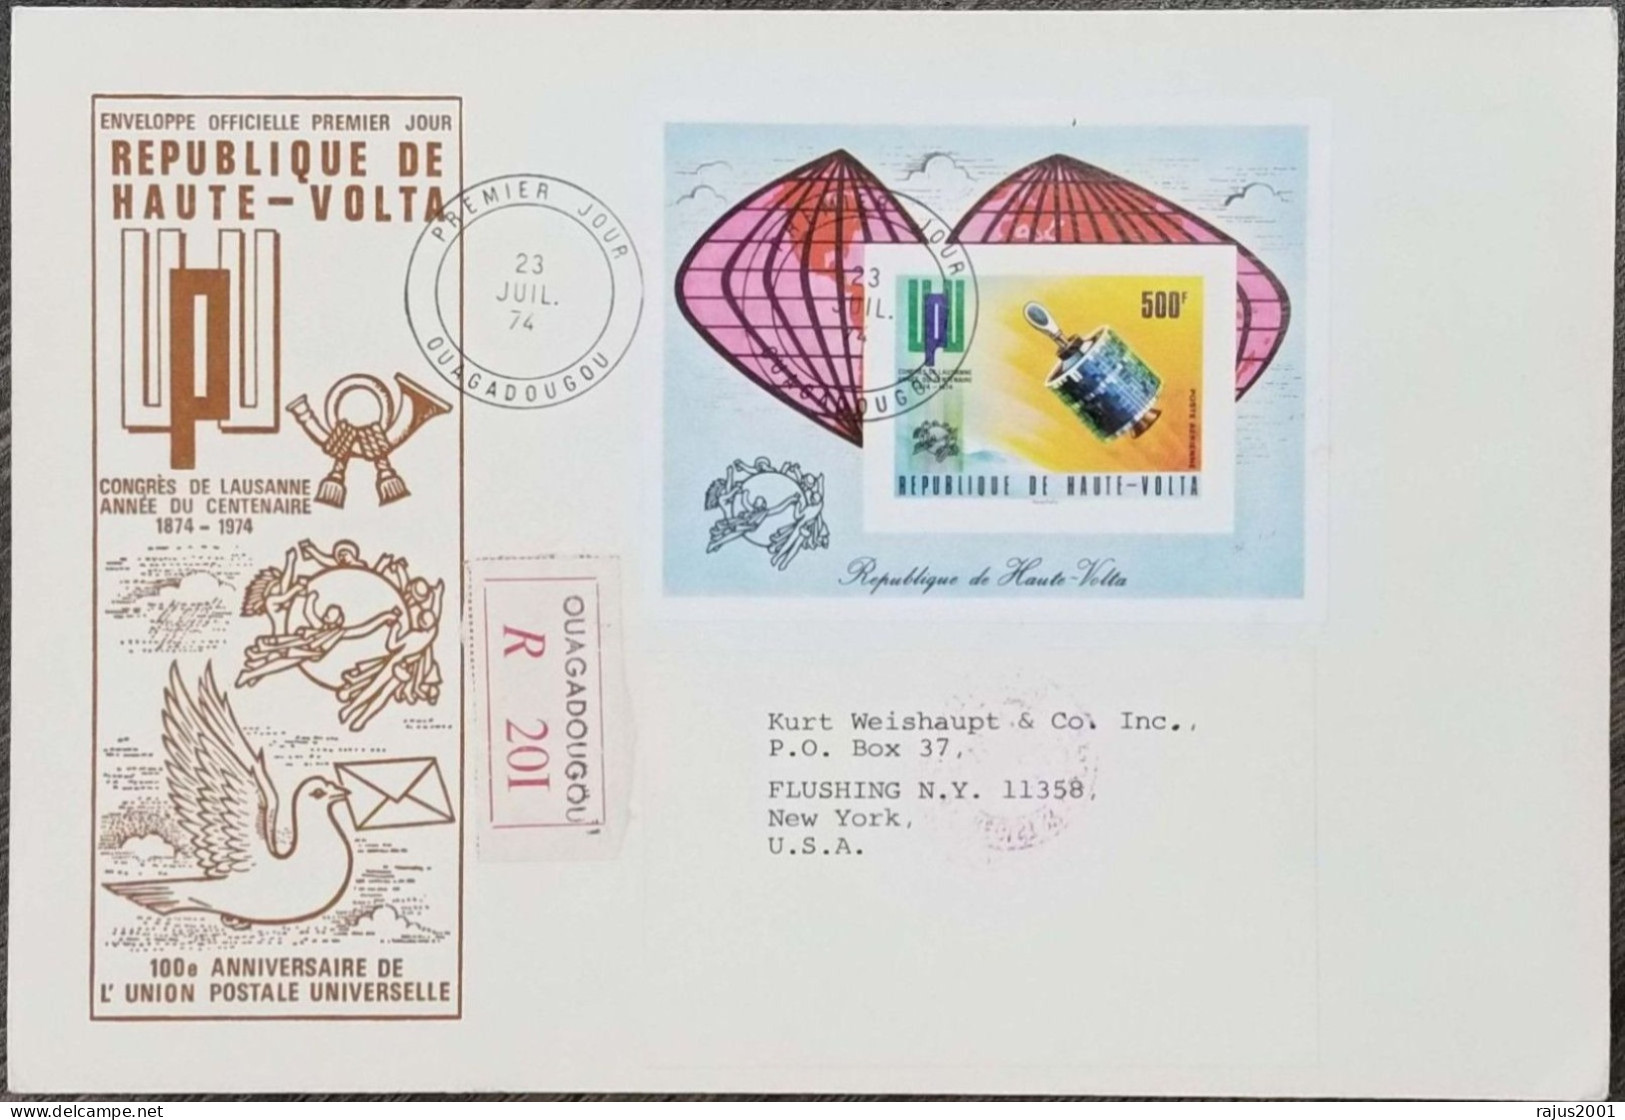 Centenary Of Universal Union Postal, U.P.U, UPU, Satellite, IMPERF MS Circulated Registered Cover FDC 1974 Upper Volta - UPU (Union Postale Universelle)